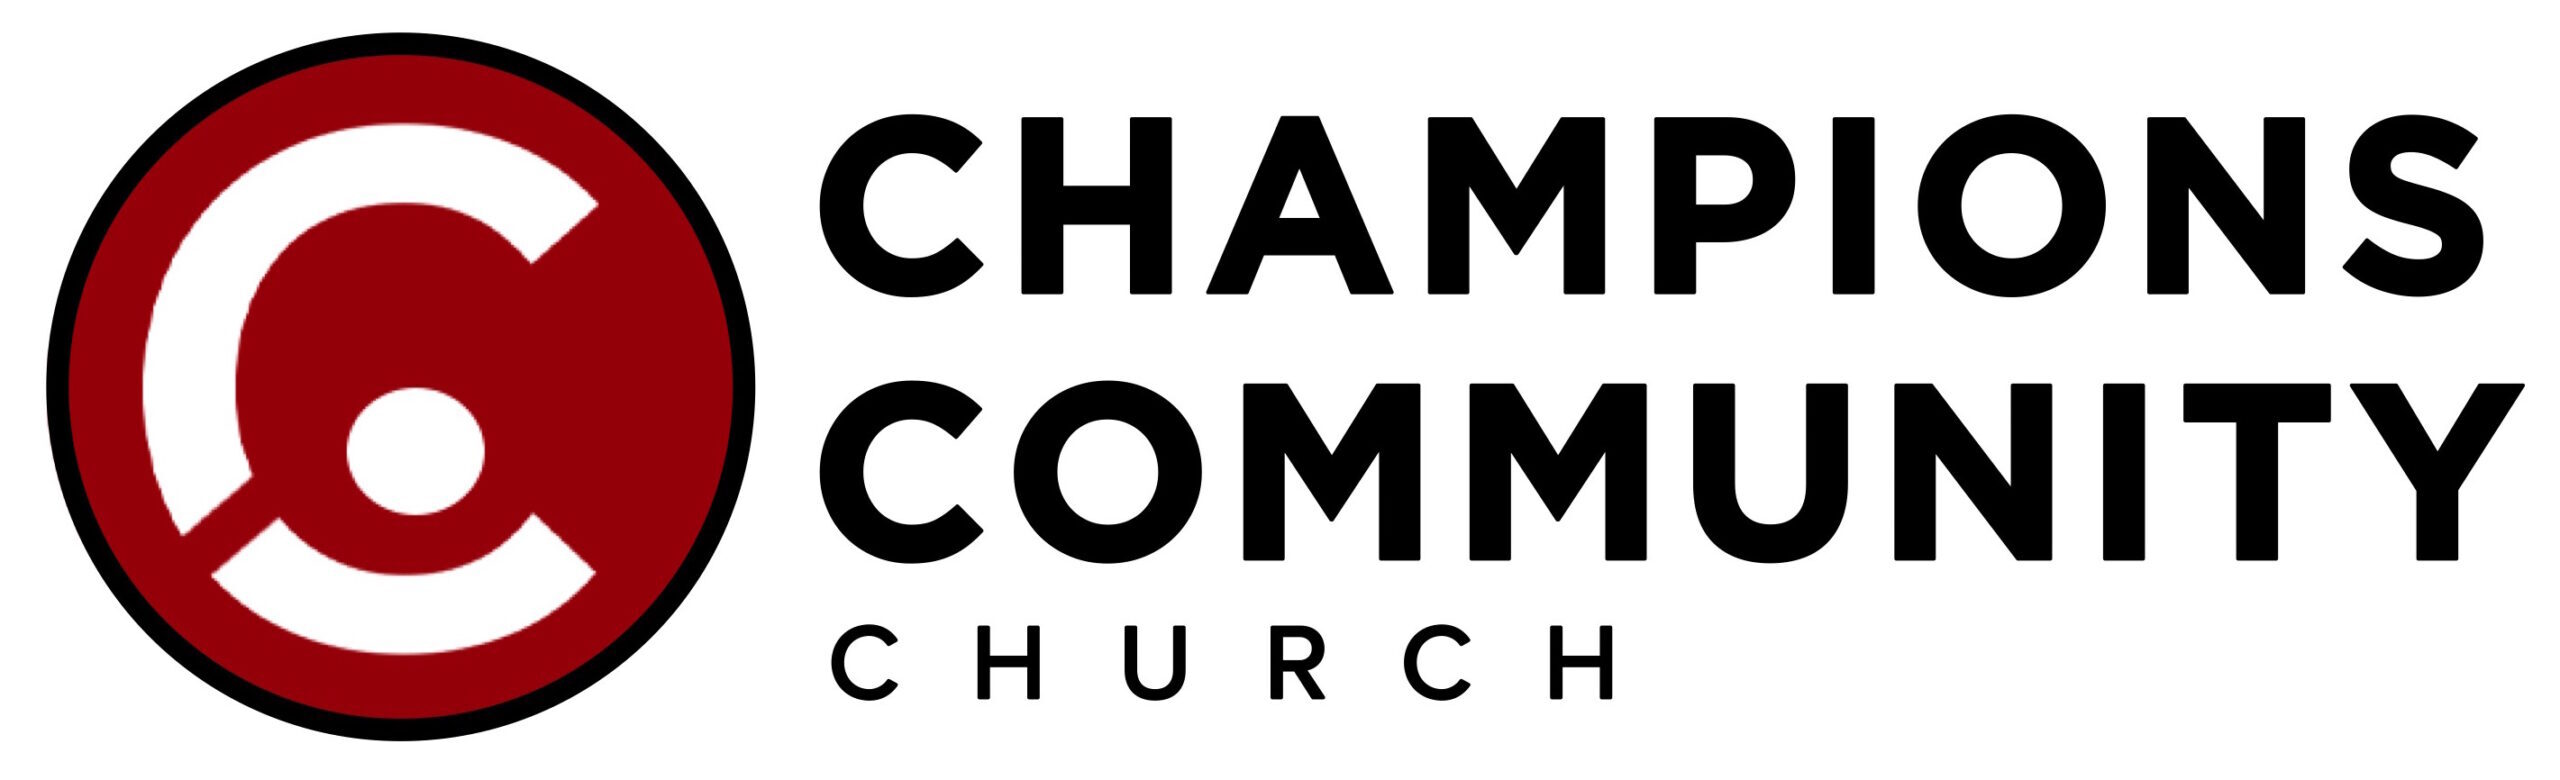 Champions Community Church – Valley Park, Missouri